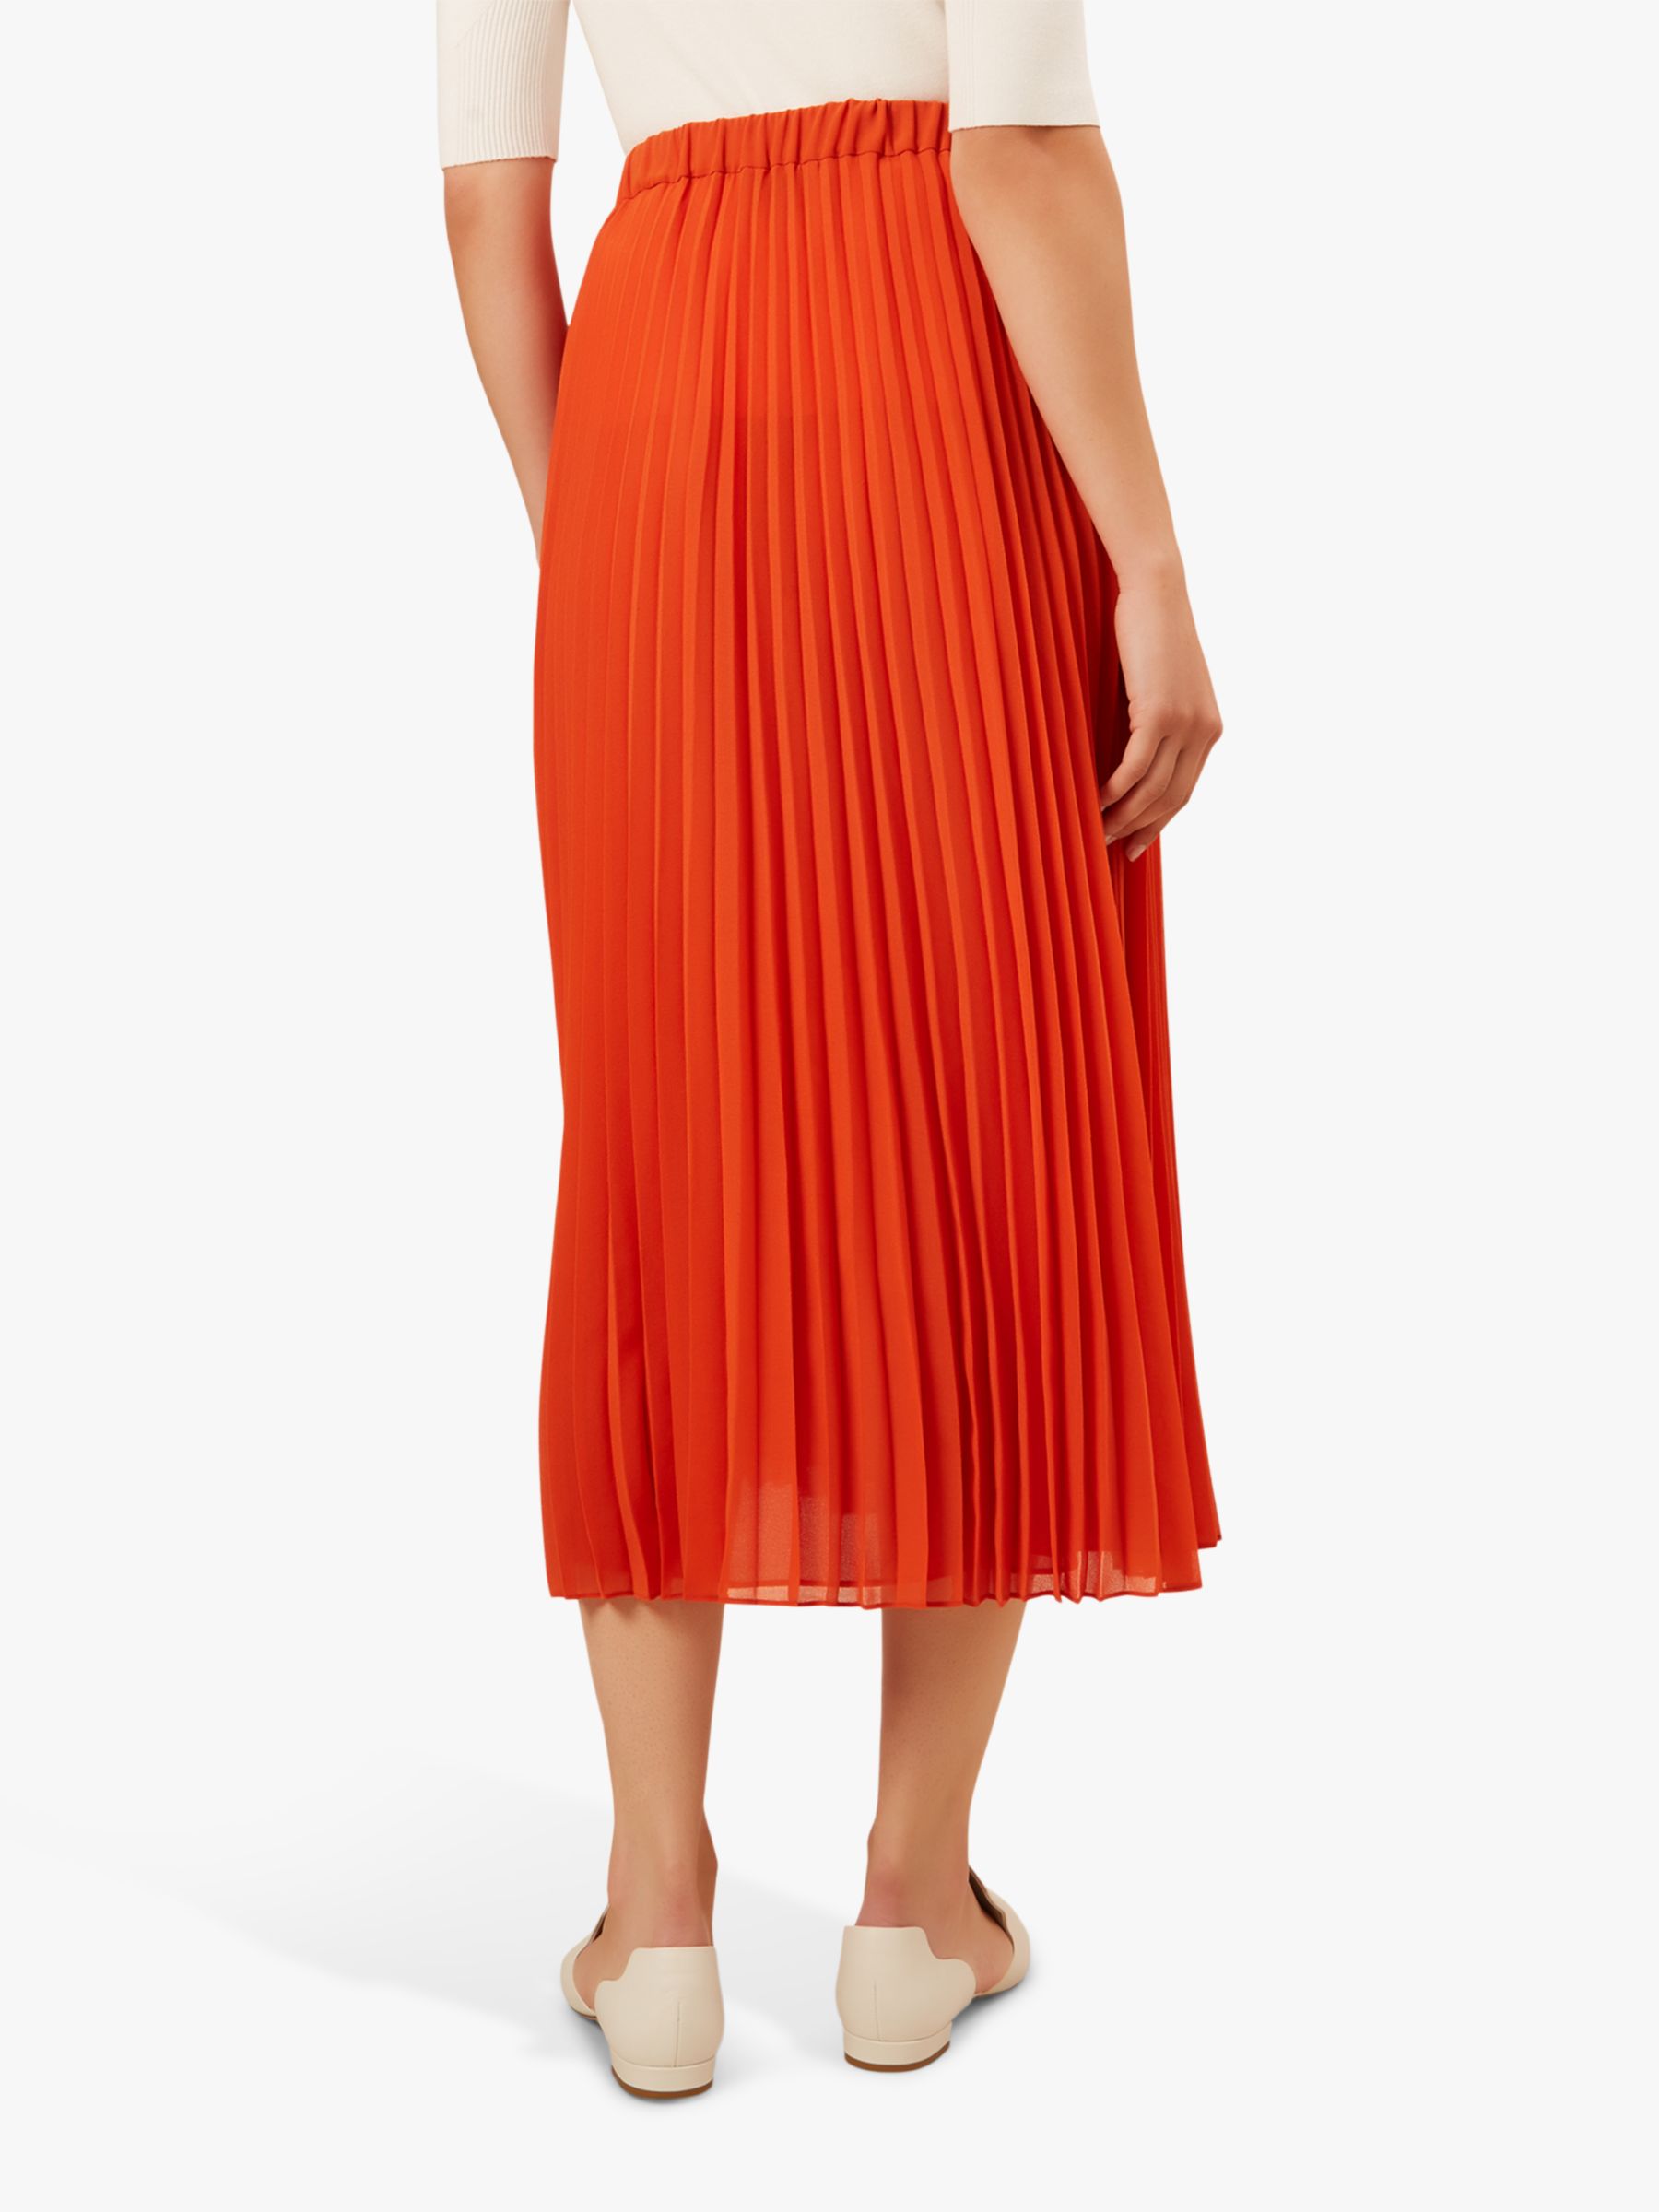 Hobbs Lilita Skirt, Burnt Orange